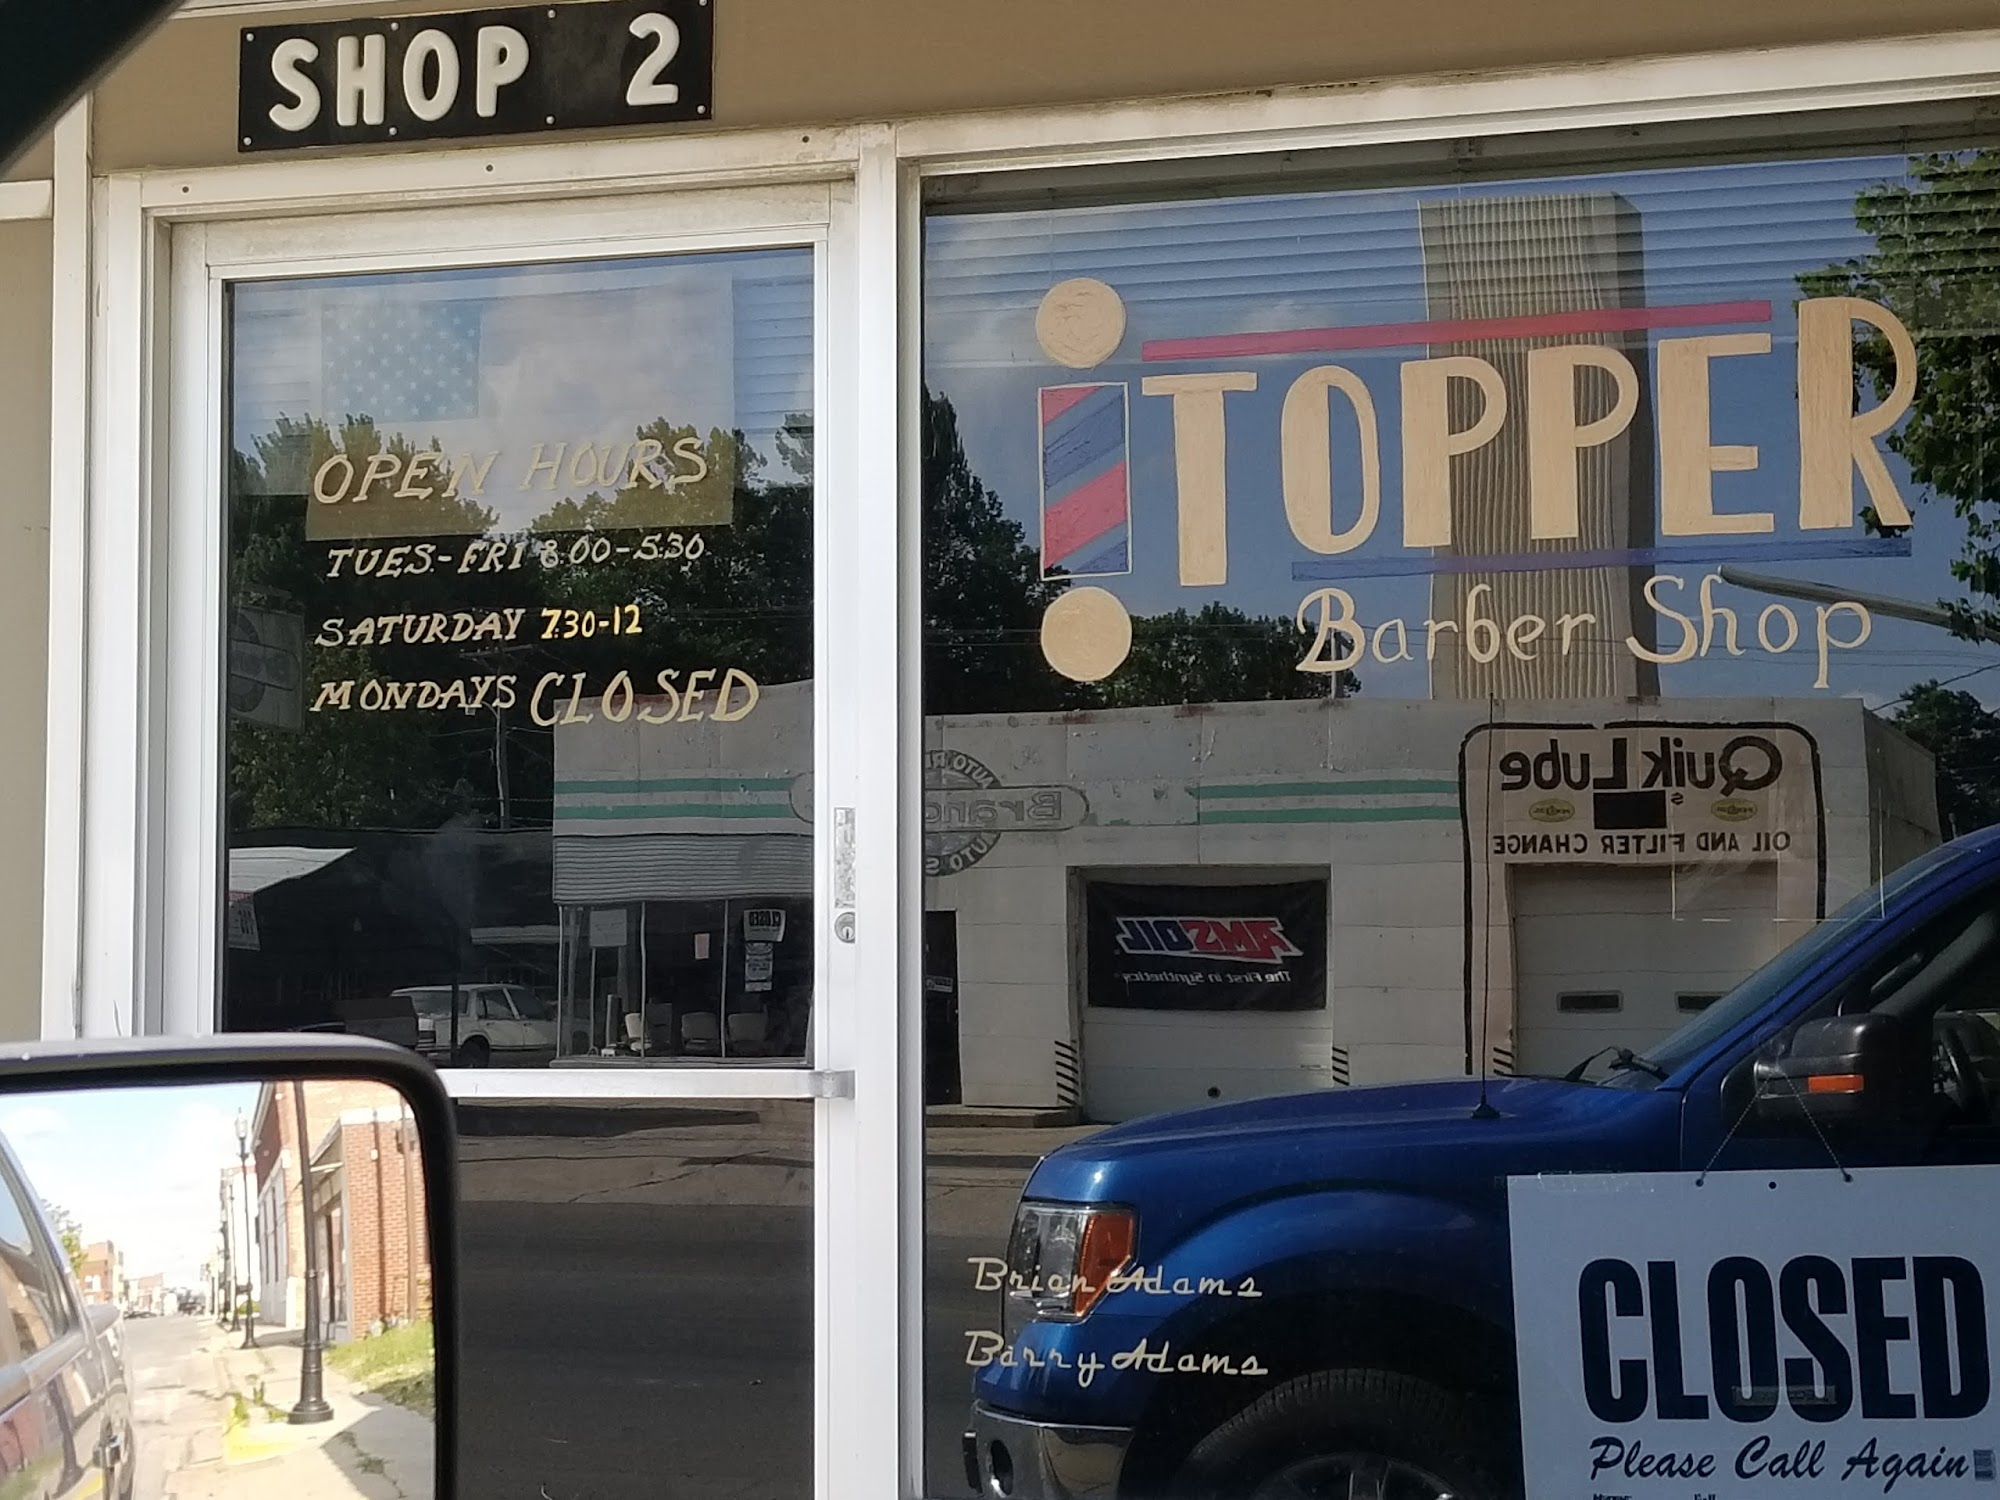 Topper Barber Shop 222 W Main St #2, Chanute Kansas 66720